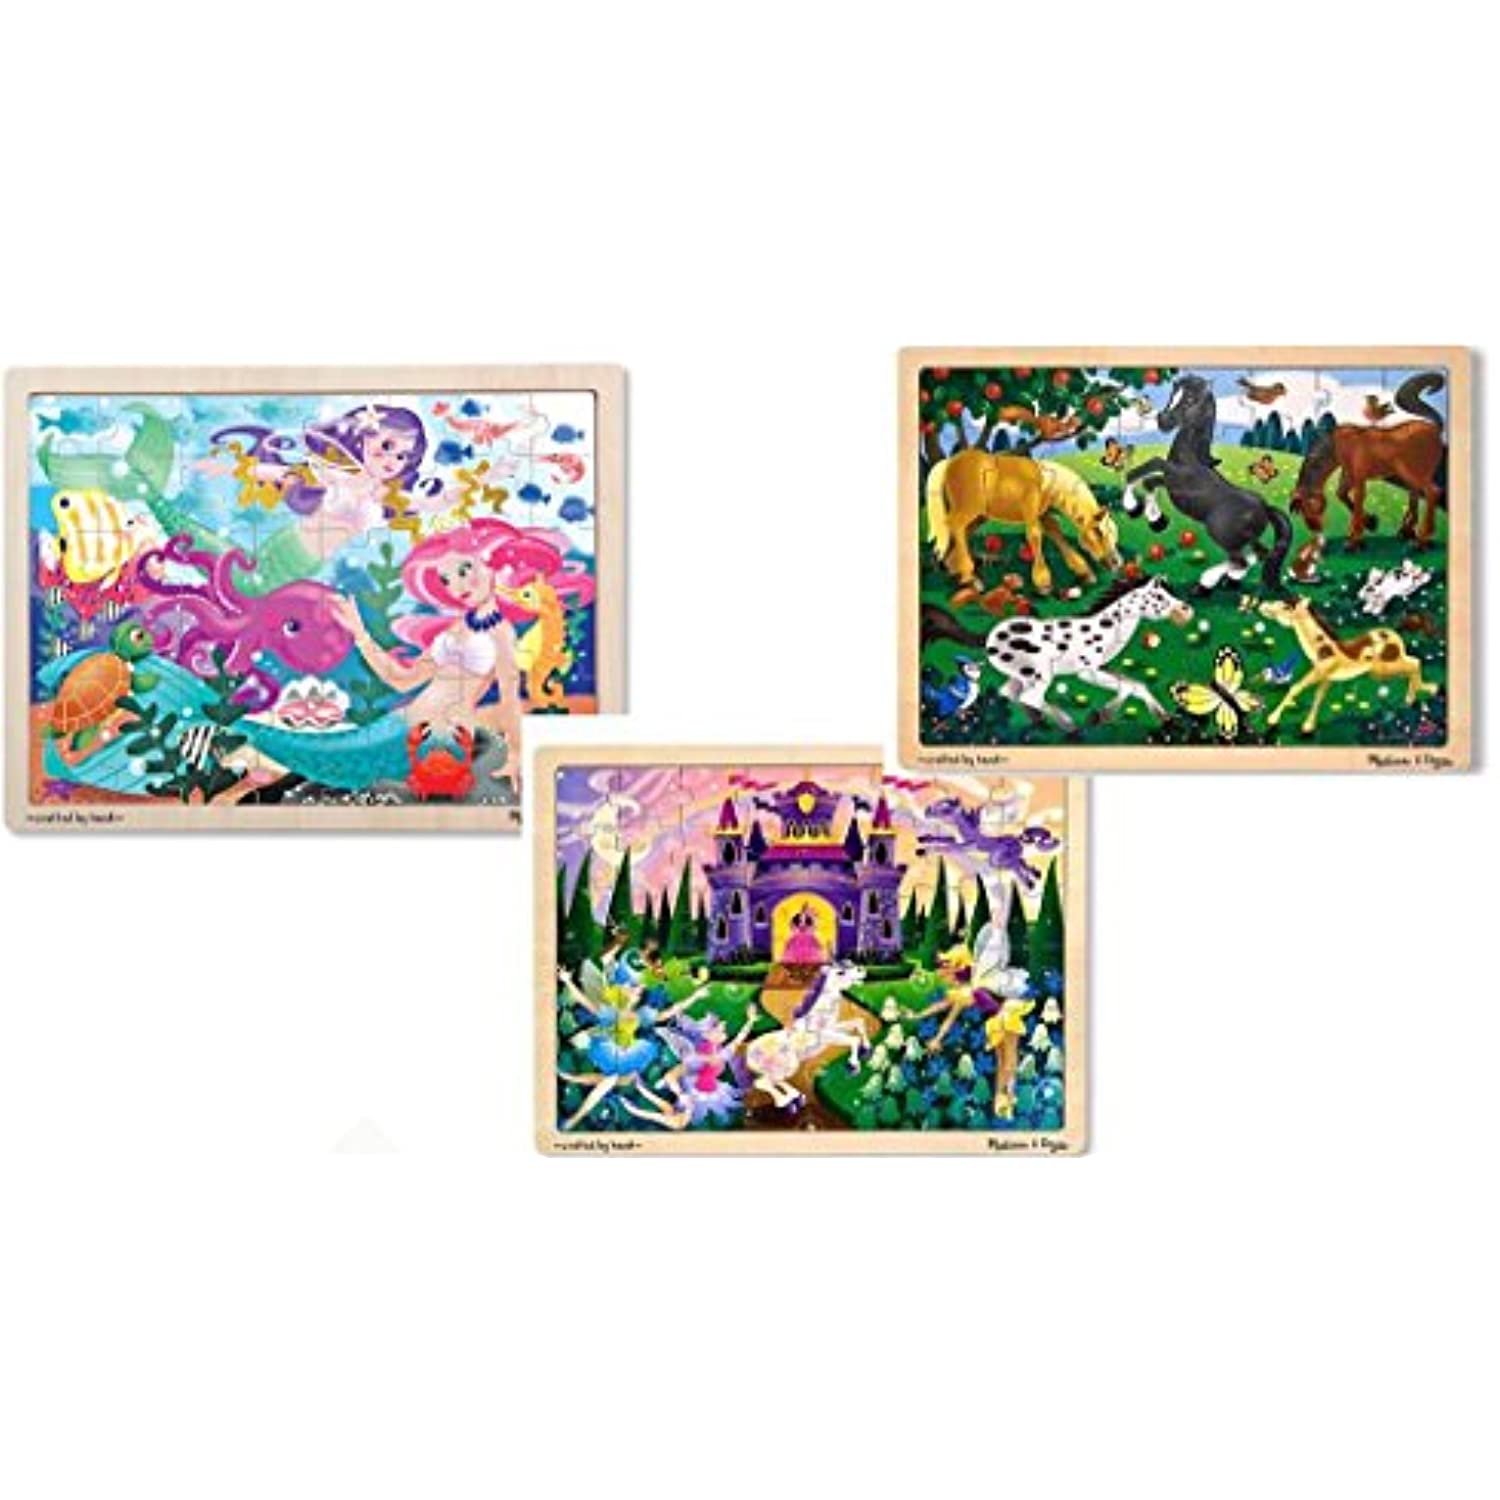 Melissa and Doug Wooden Jigsaw Puzzle 48 pcs Bundle Set Age 4 and up / 1- Mermaid , 1 - Fairy Fantasy, and 1 Frolicking Horses